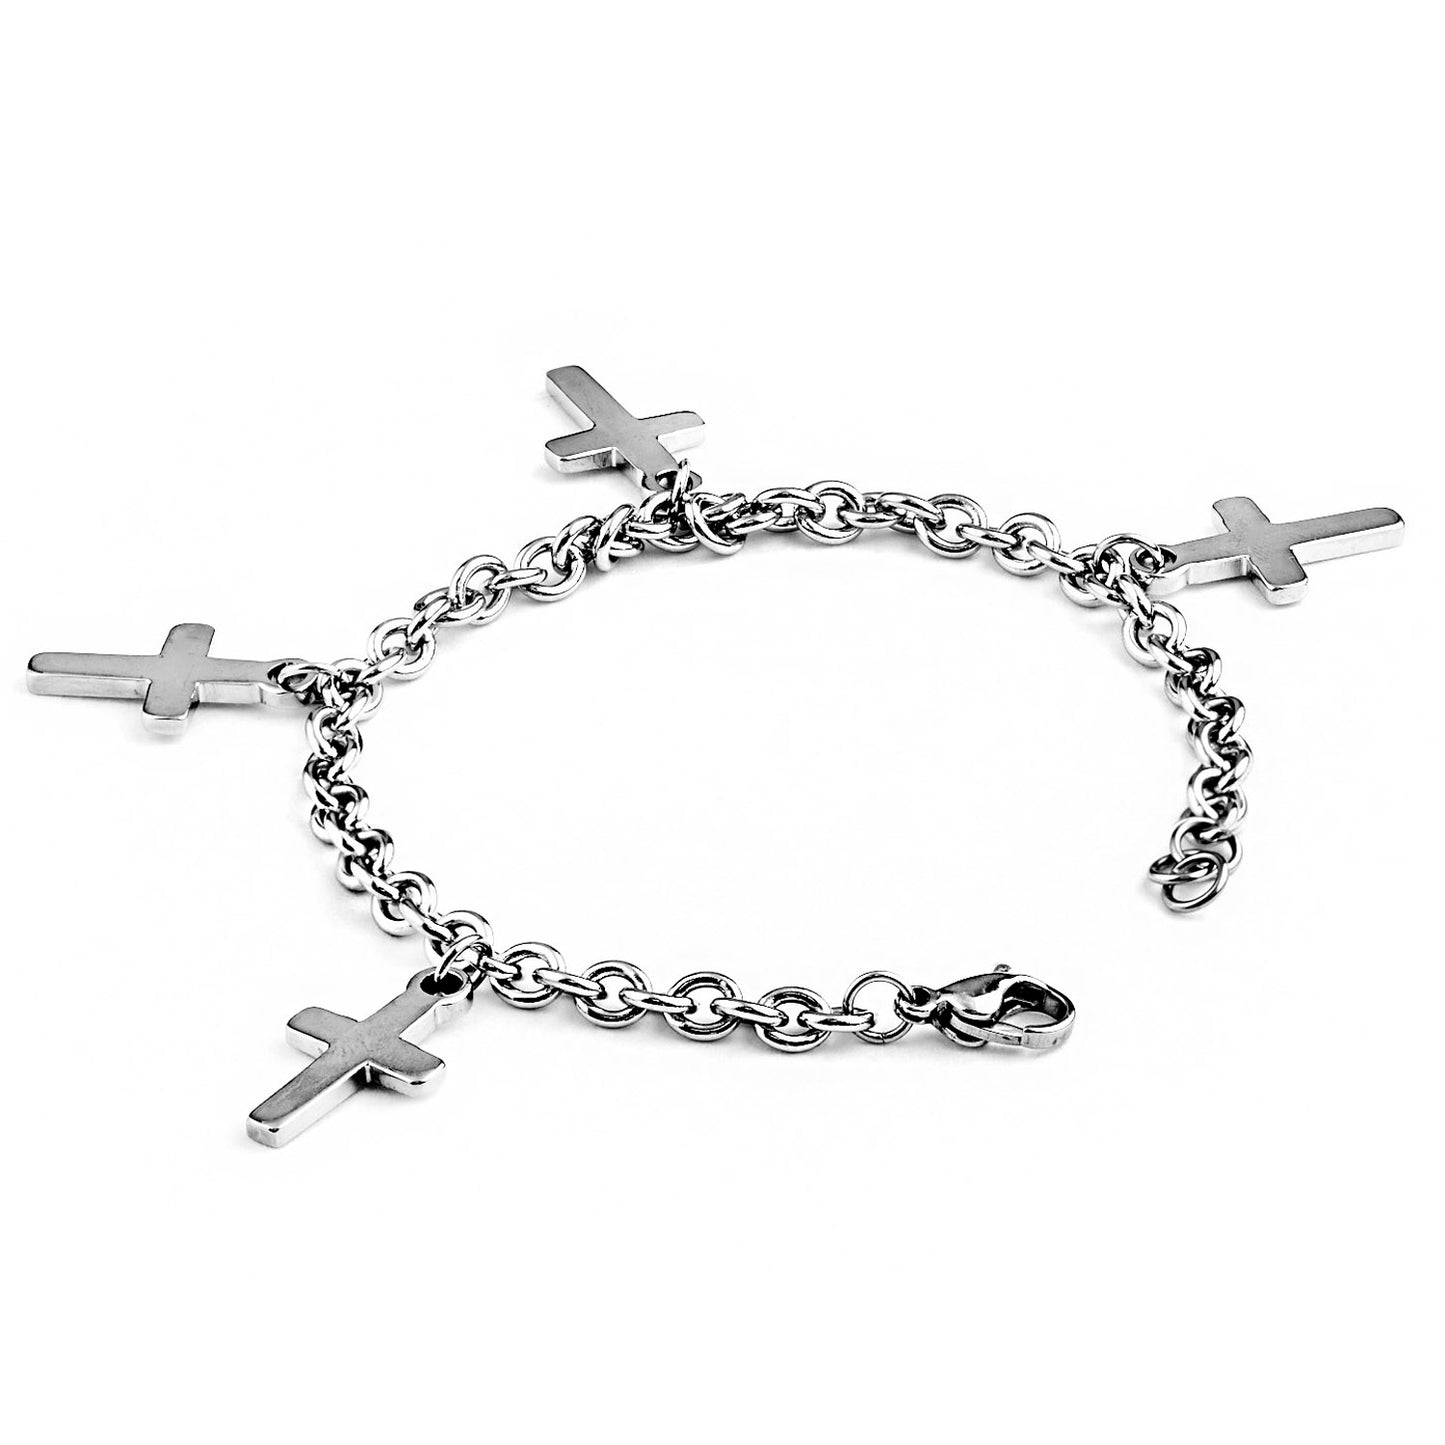 ELYA Polished Dangling Cross Charms Stainless Steel Bracelet - 7.5"